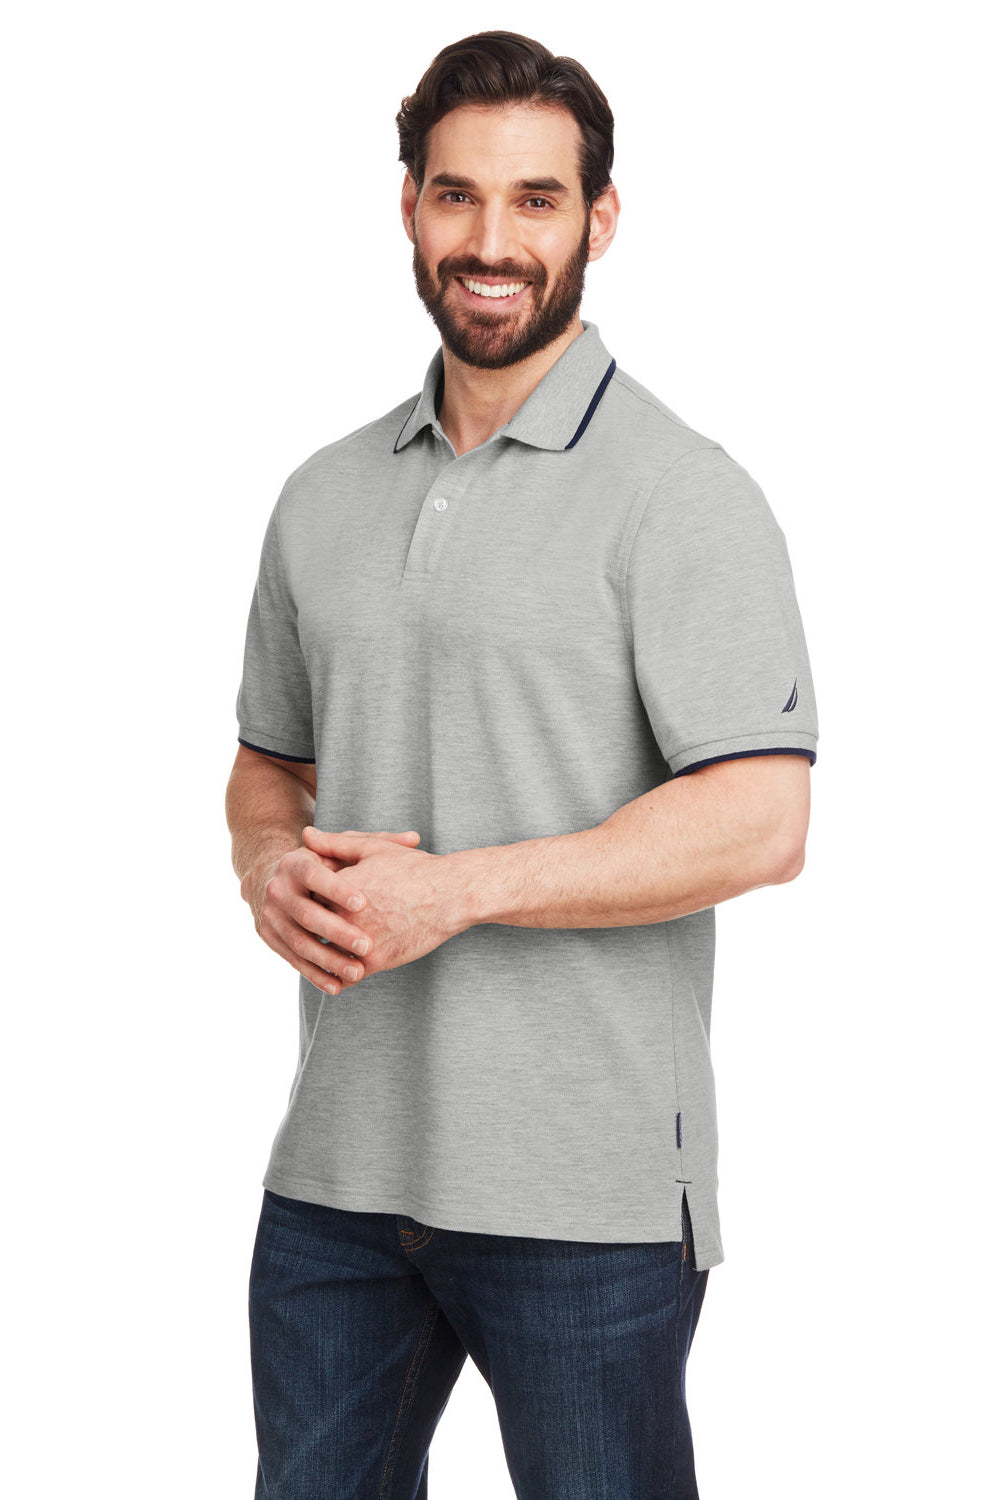 Nautica N17165 Mens Desk Short Sleeve Polo Shirt Oxford Grey/Navy Blue 3Q